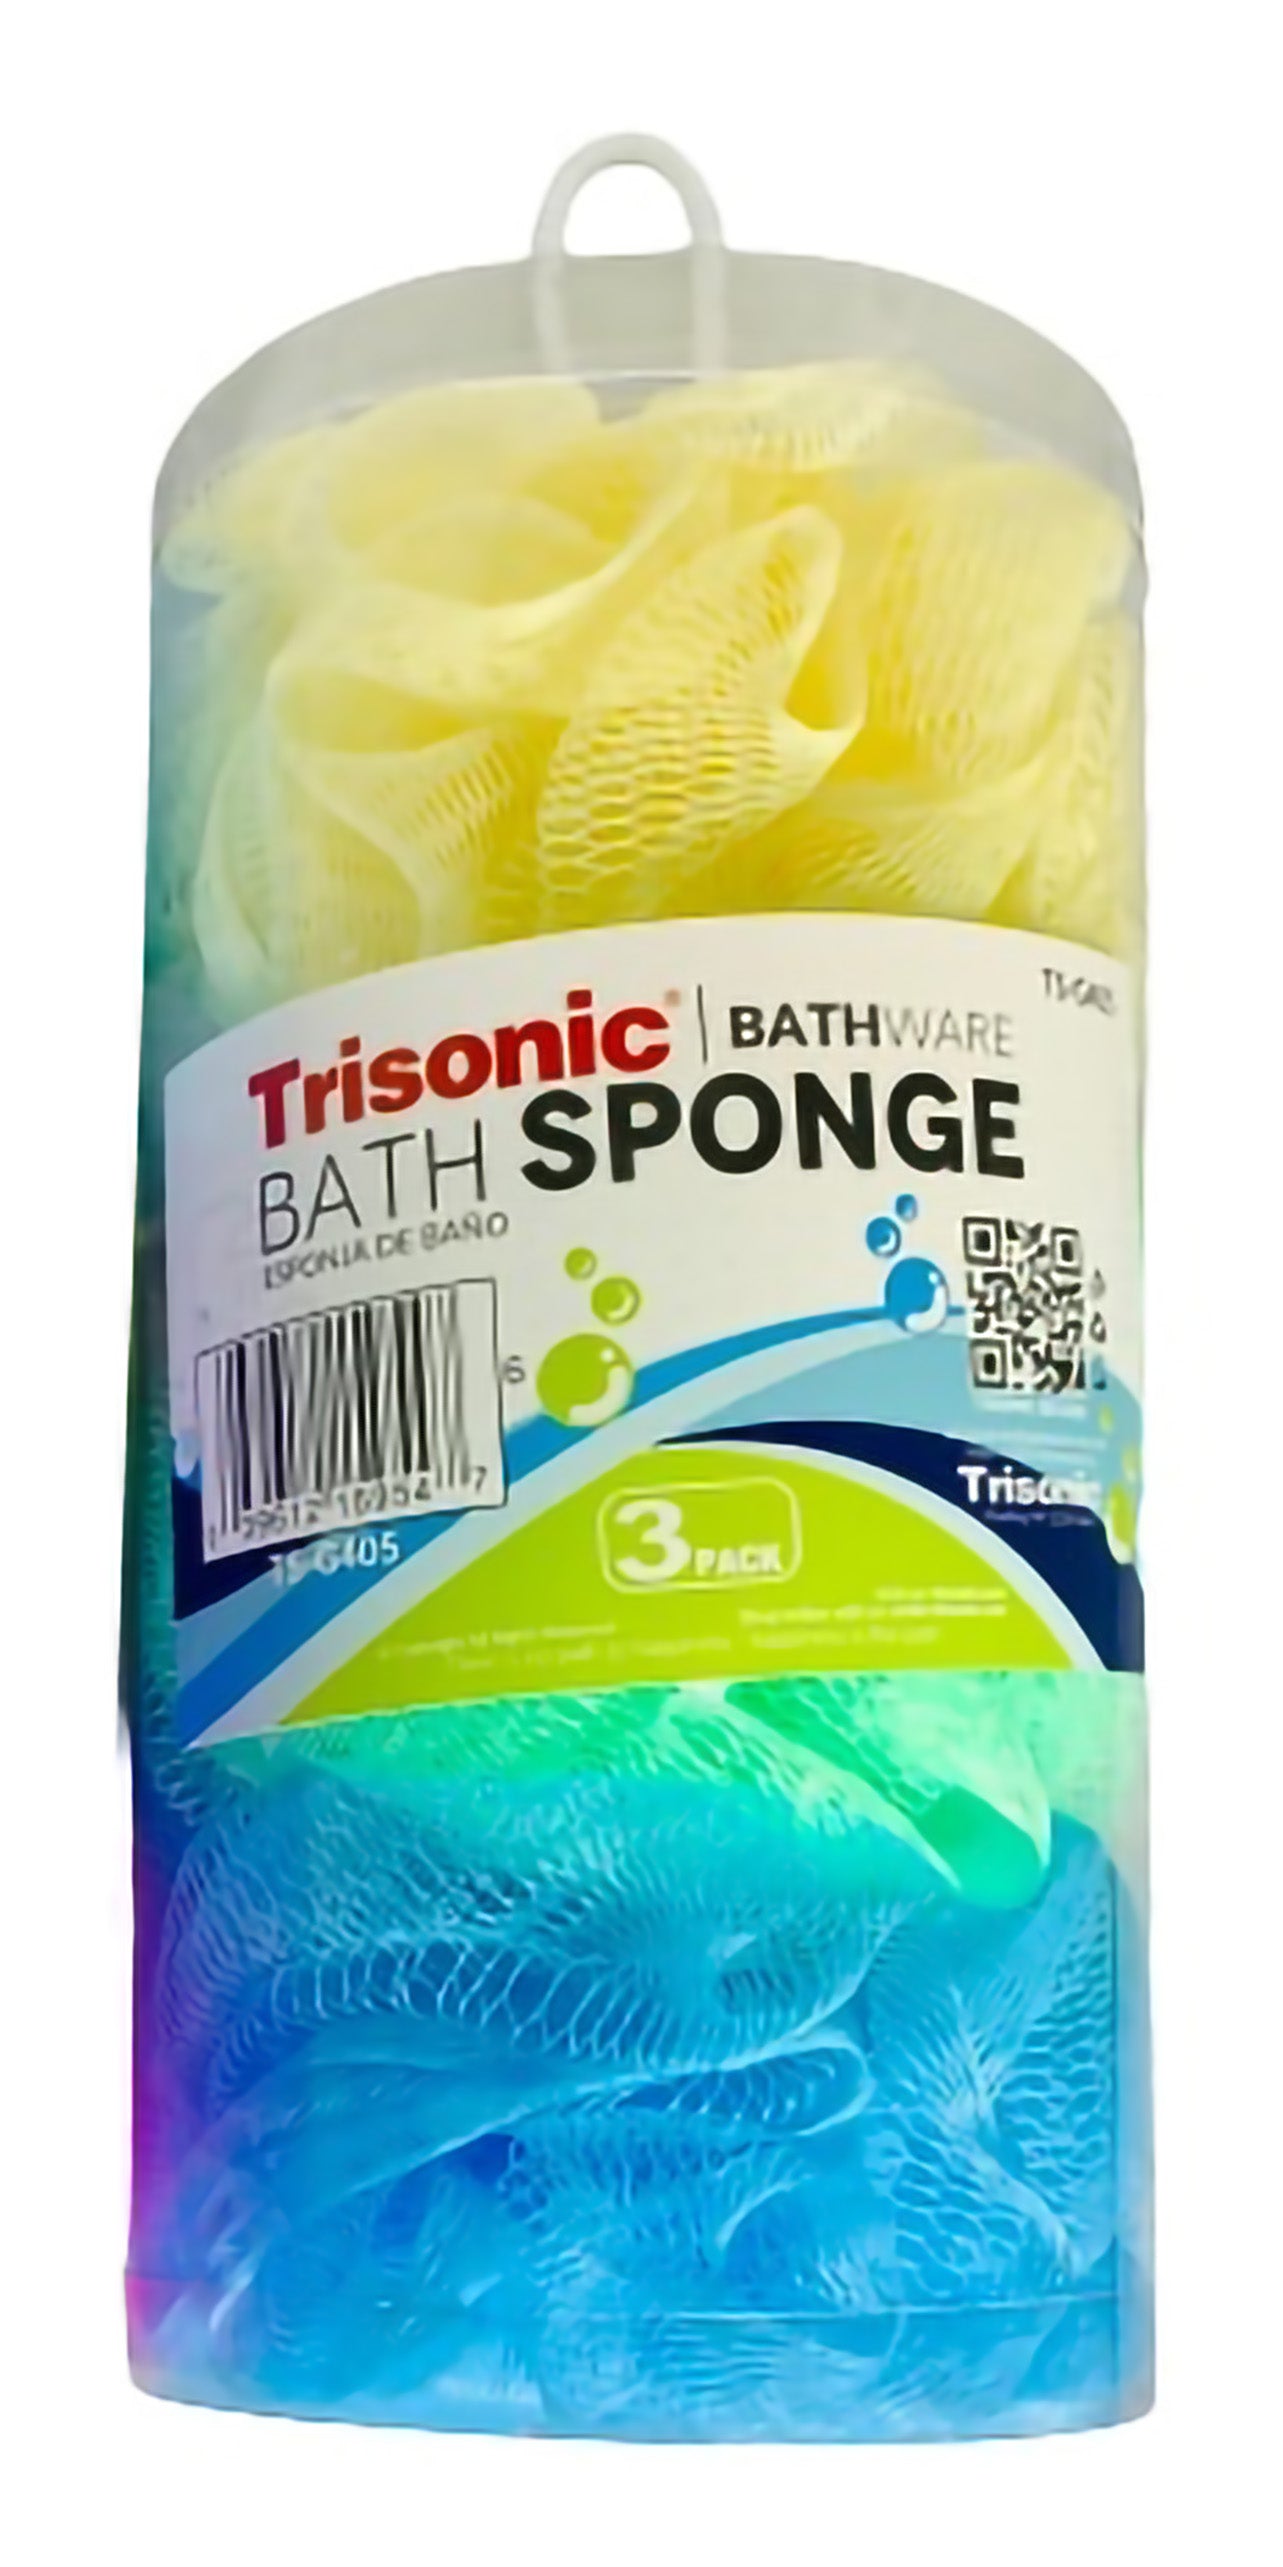 Bath Sponge Shower Loofahs Mesh Pouf Bath Scrunchies Body Wash Puff Pack of 3